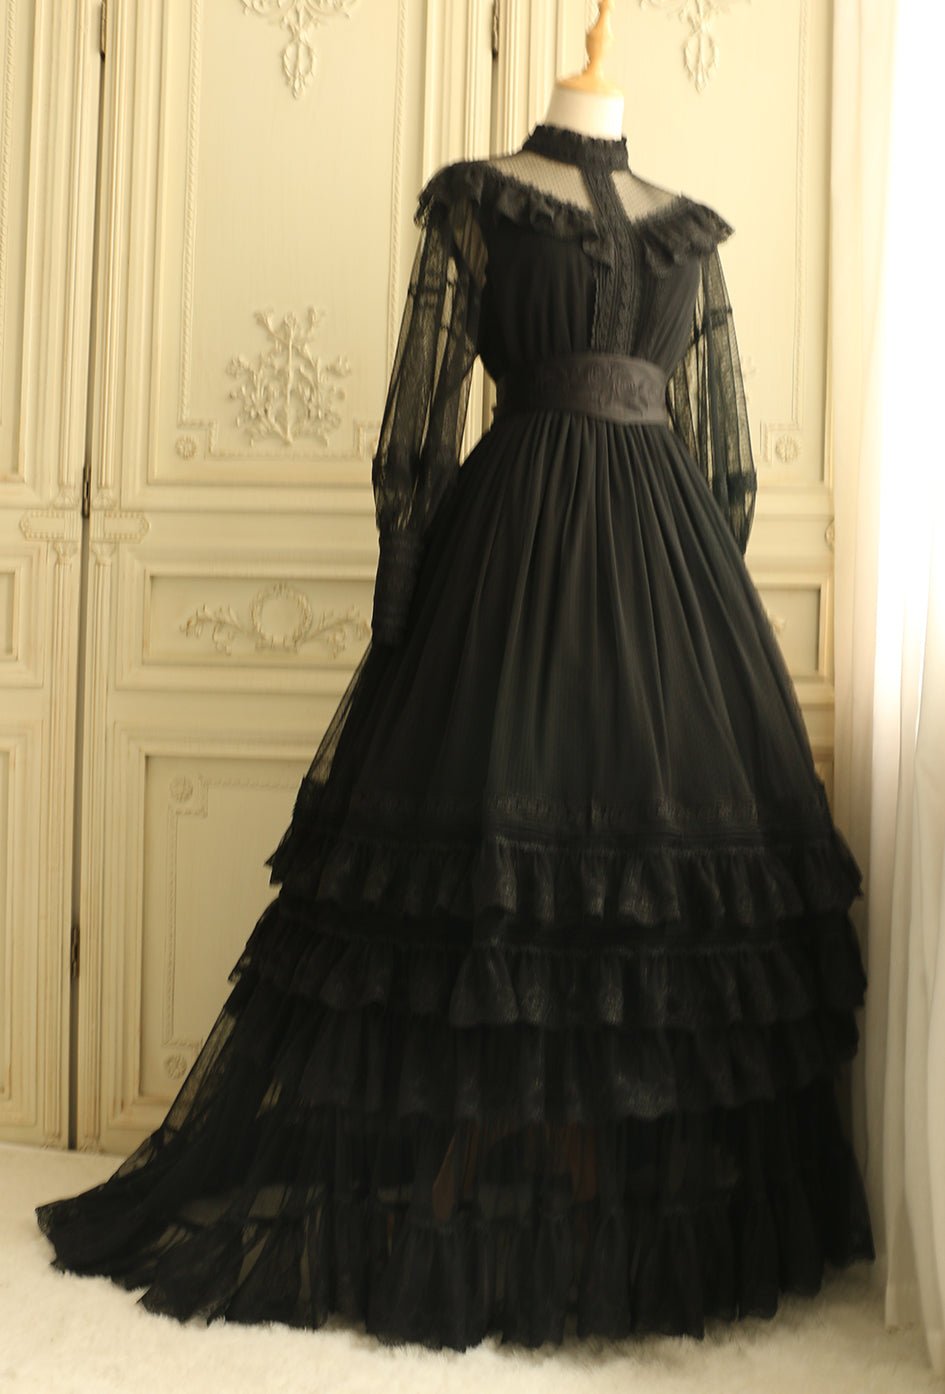 Edwardian Style Gothic Black Long Dress - Victorian Lace Dress - WonderlandByLilian